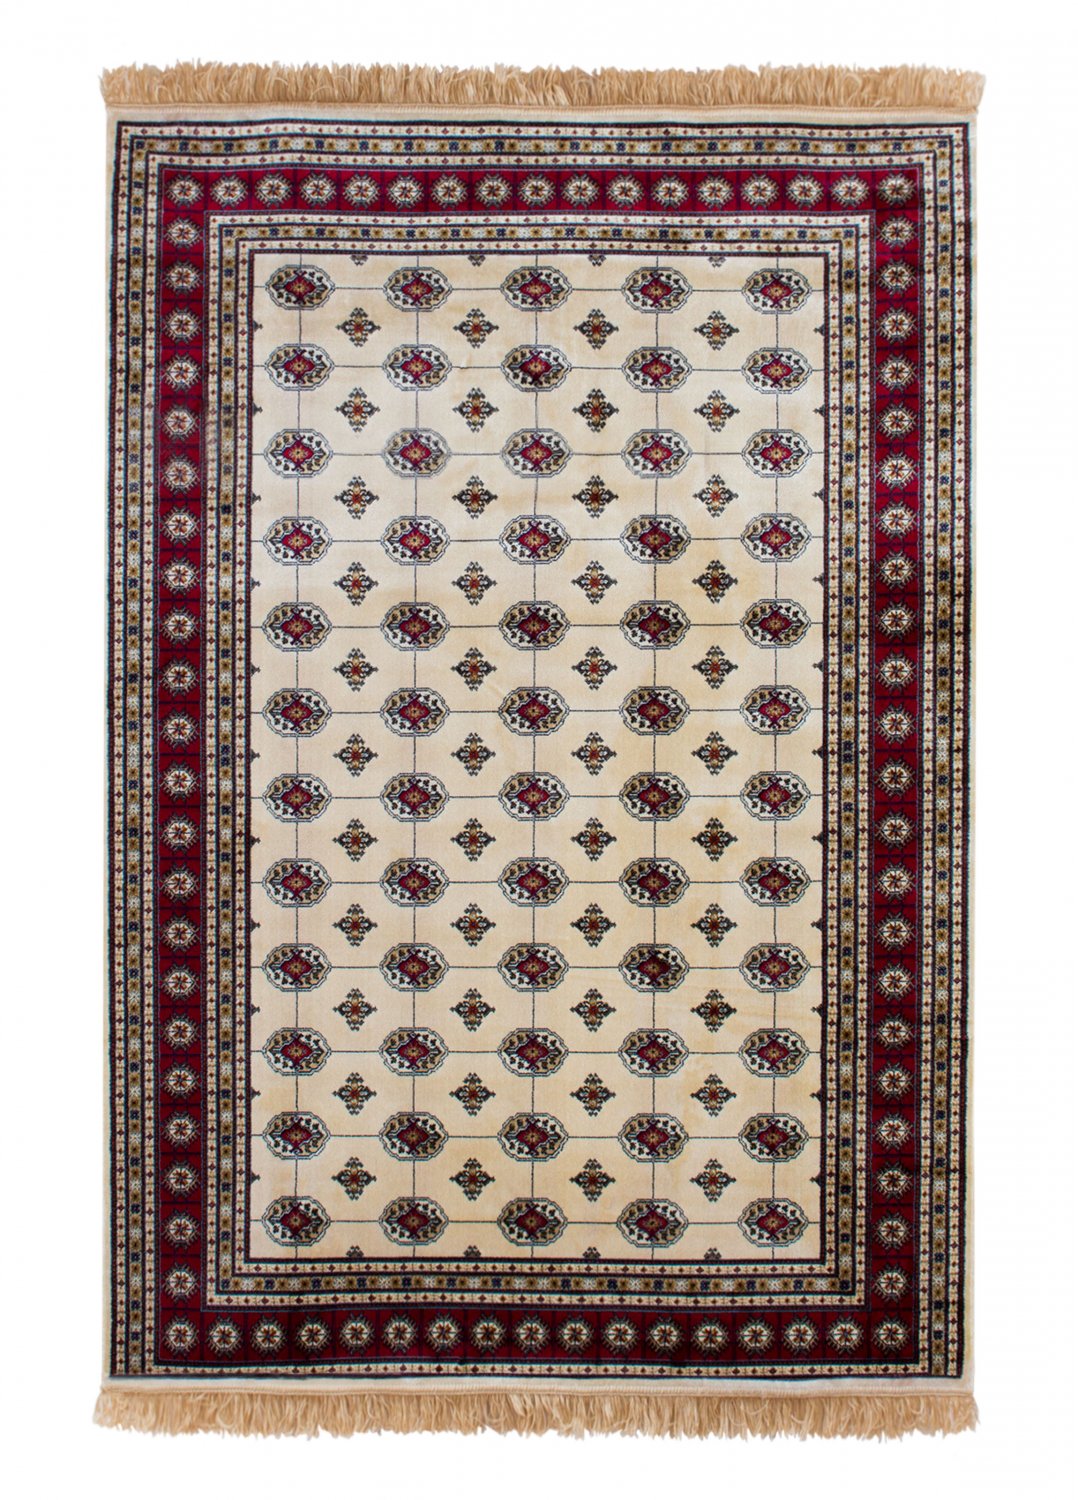 Wilton rug
- Kashmir Boccara (ivory)